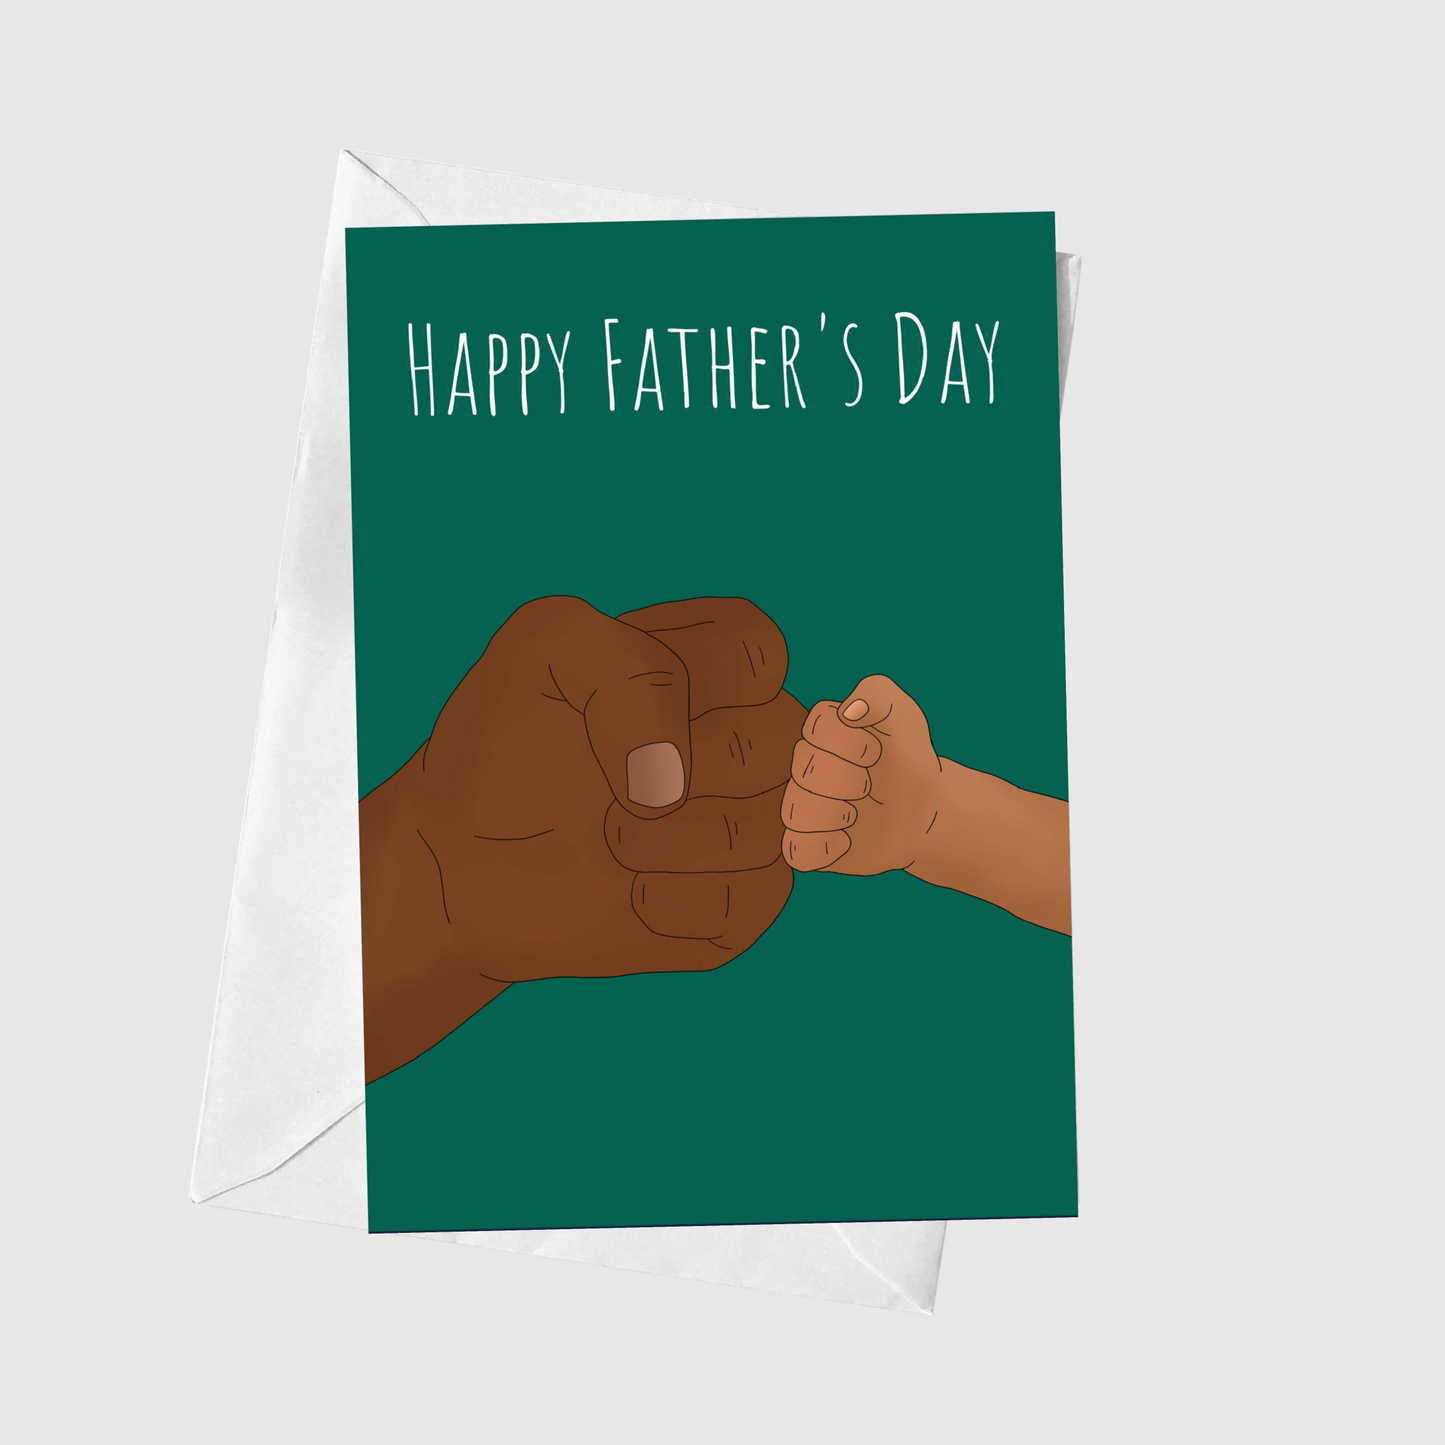 Happy Father’s Day Fist-bump